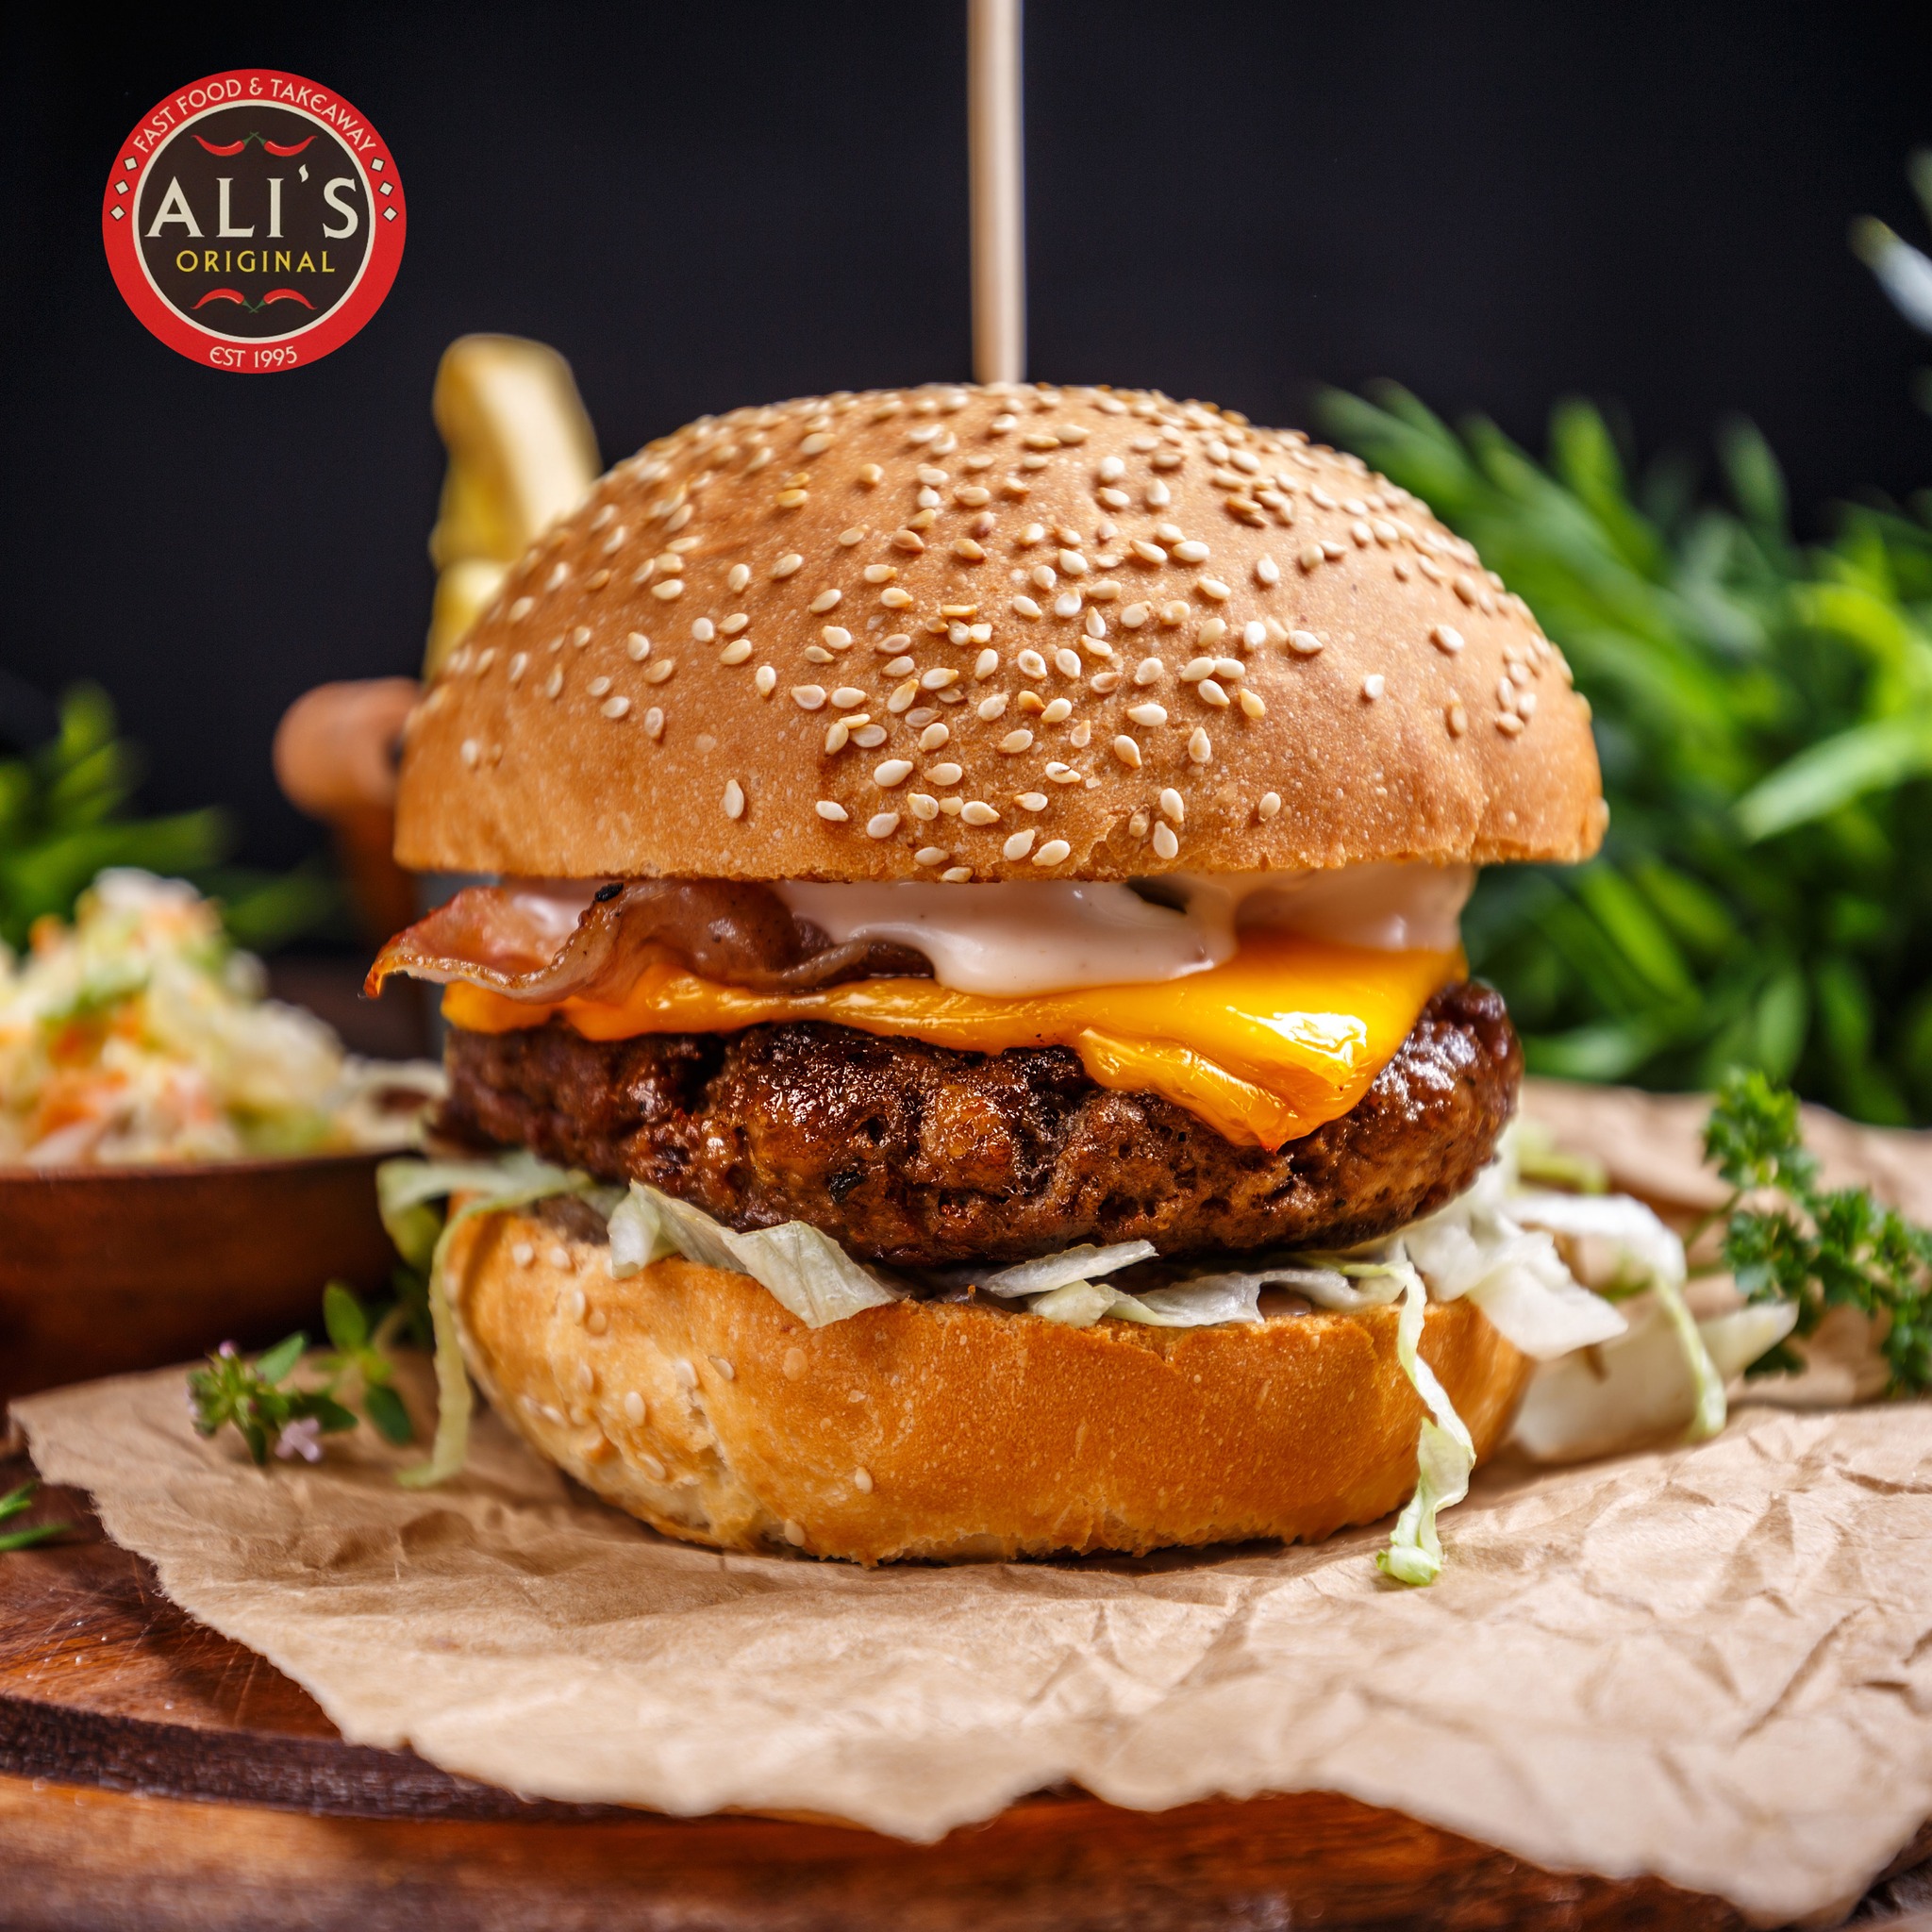 Ali's Original takeaway Glasgow beef burger